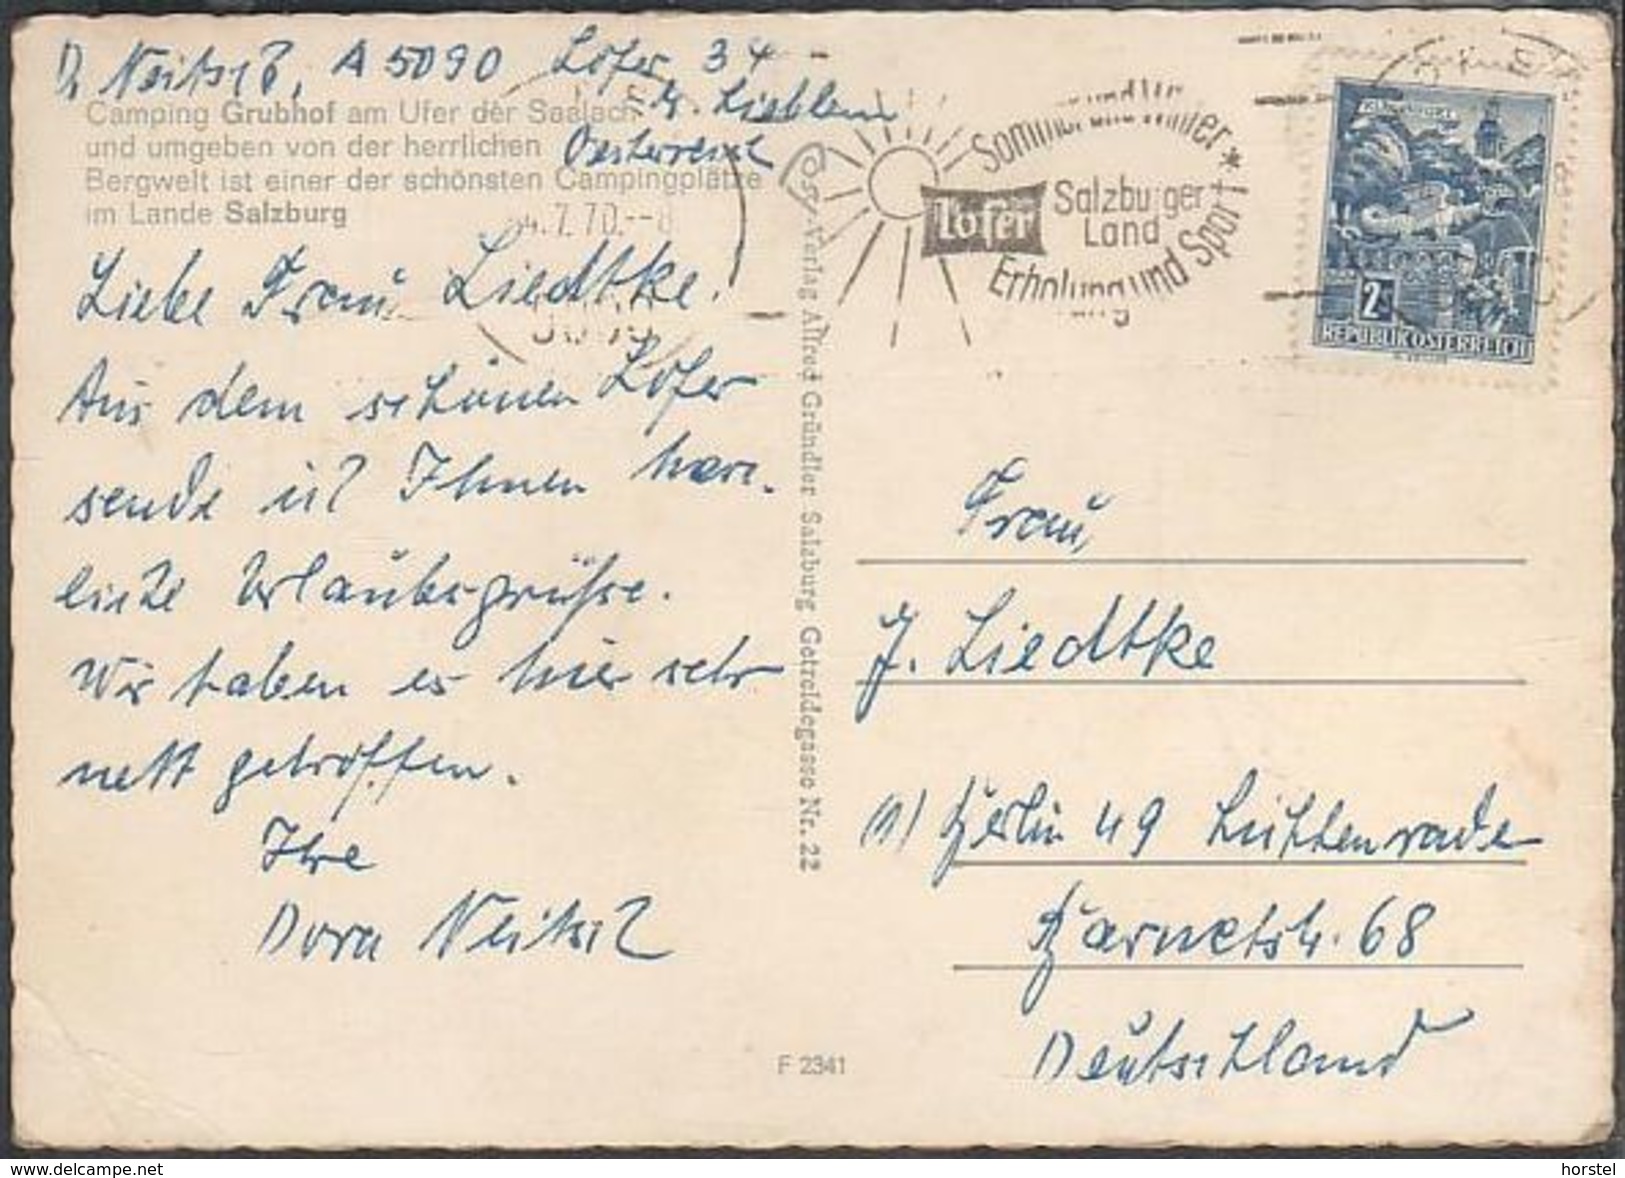 Austria - 5090 Lofer - St. Martin - Campingplatz Grubhof - Cars - VW Käfer (60er Jahre) - Stamp - Lofer